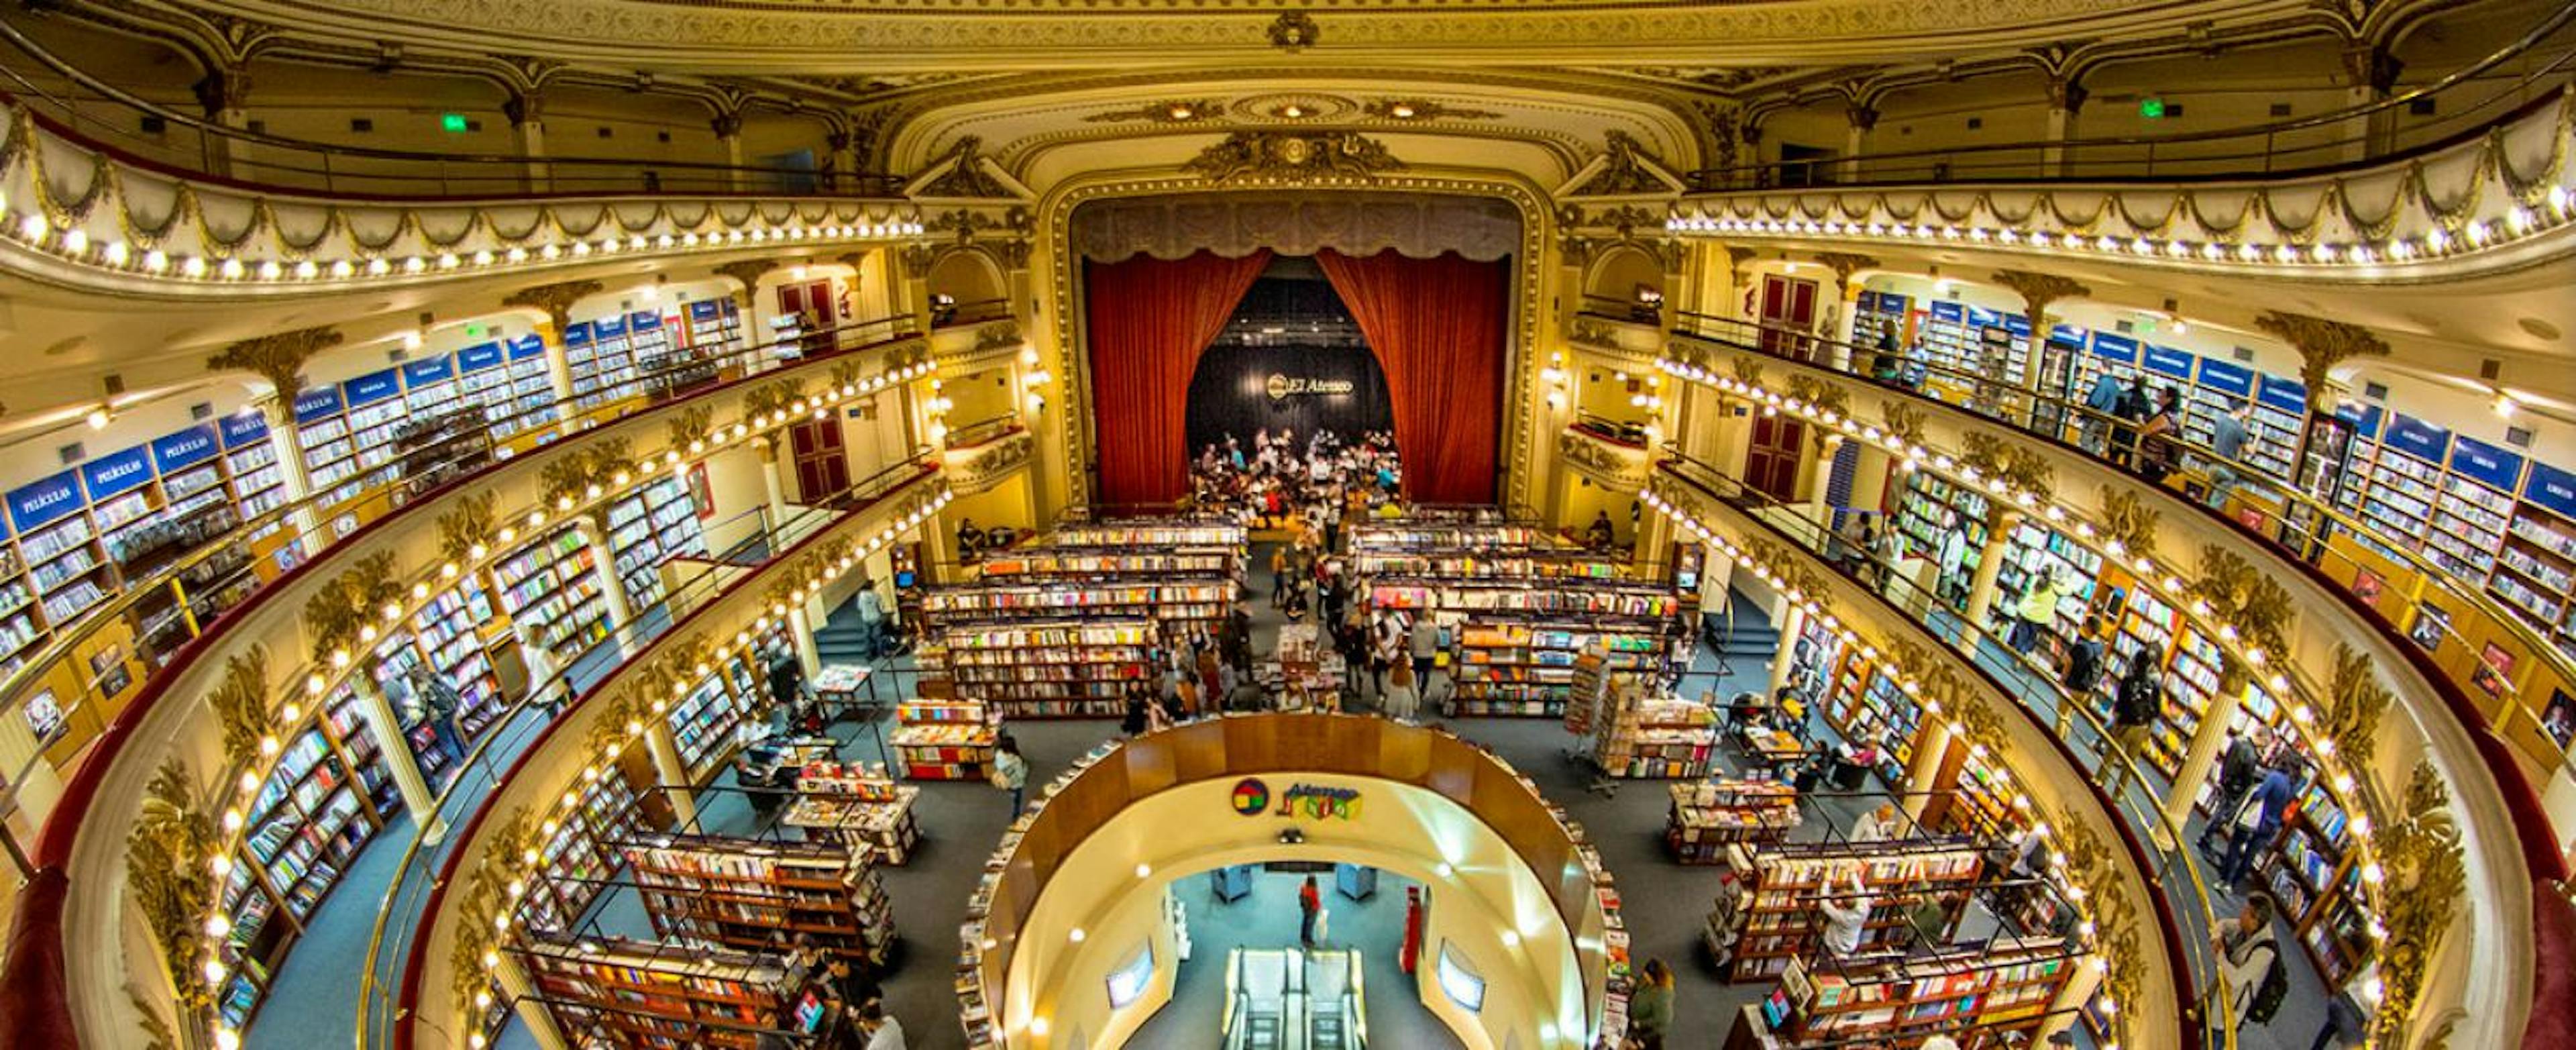 Foto panorâmica interna da livraria El Ateneo Grand Splendid em Buenos Aires